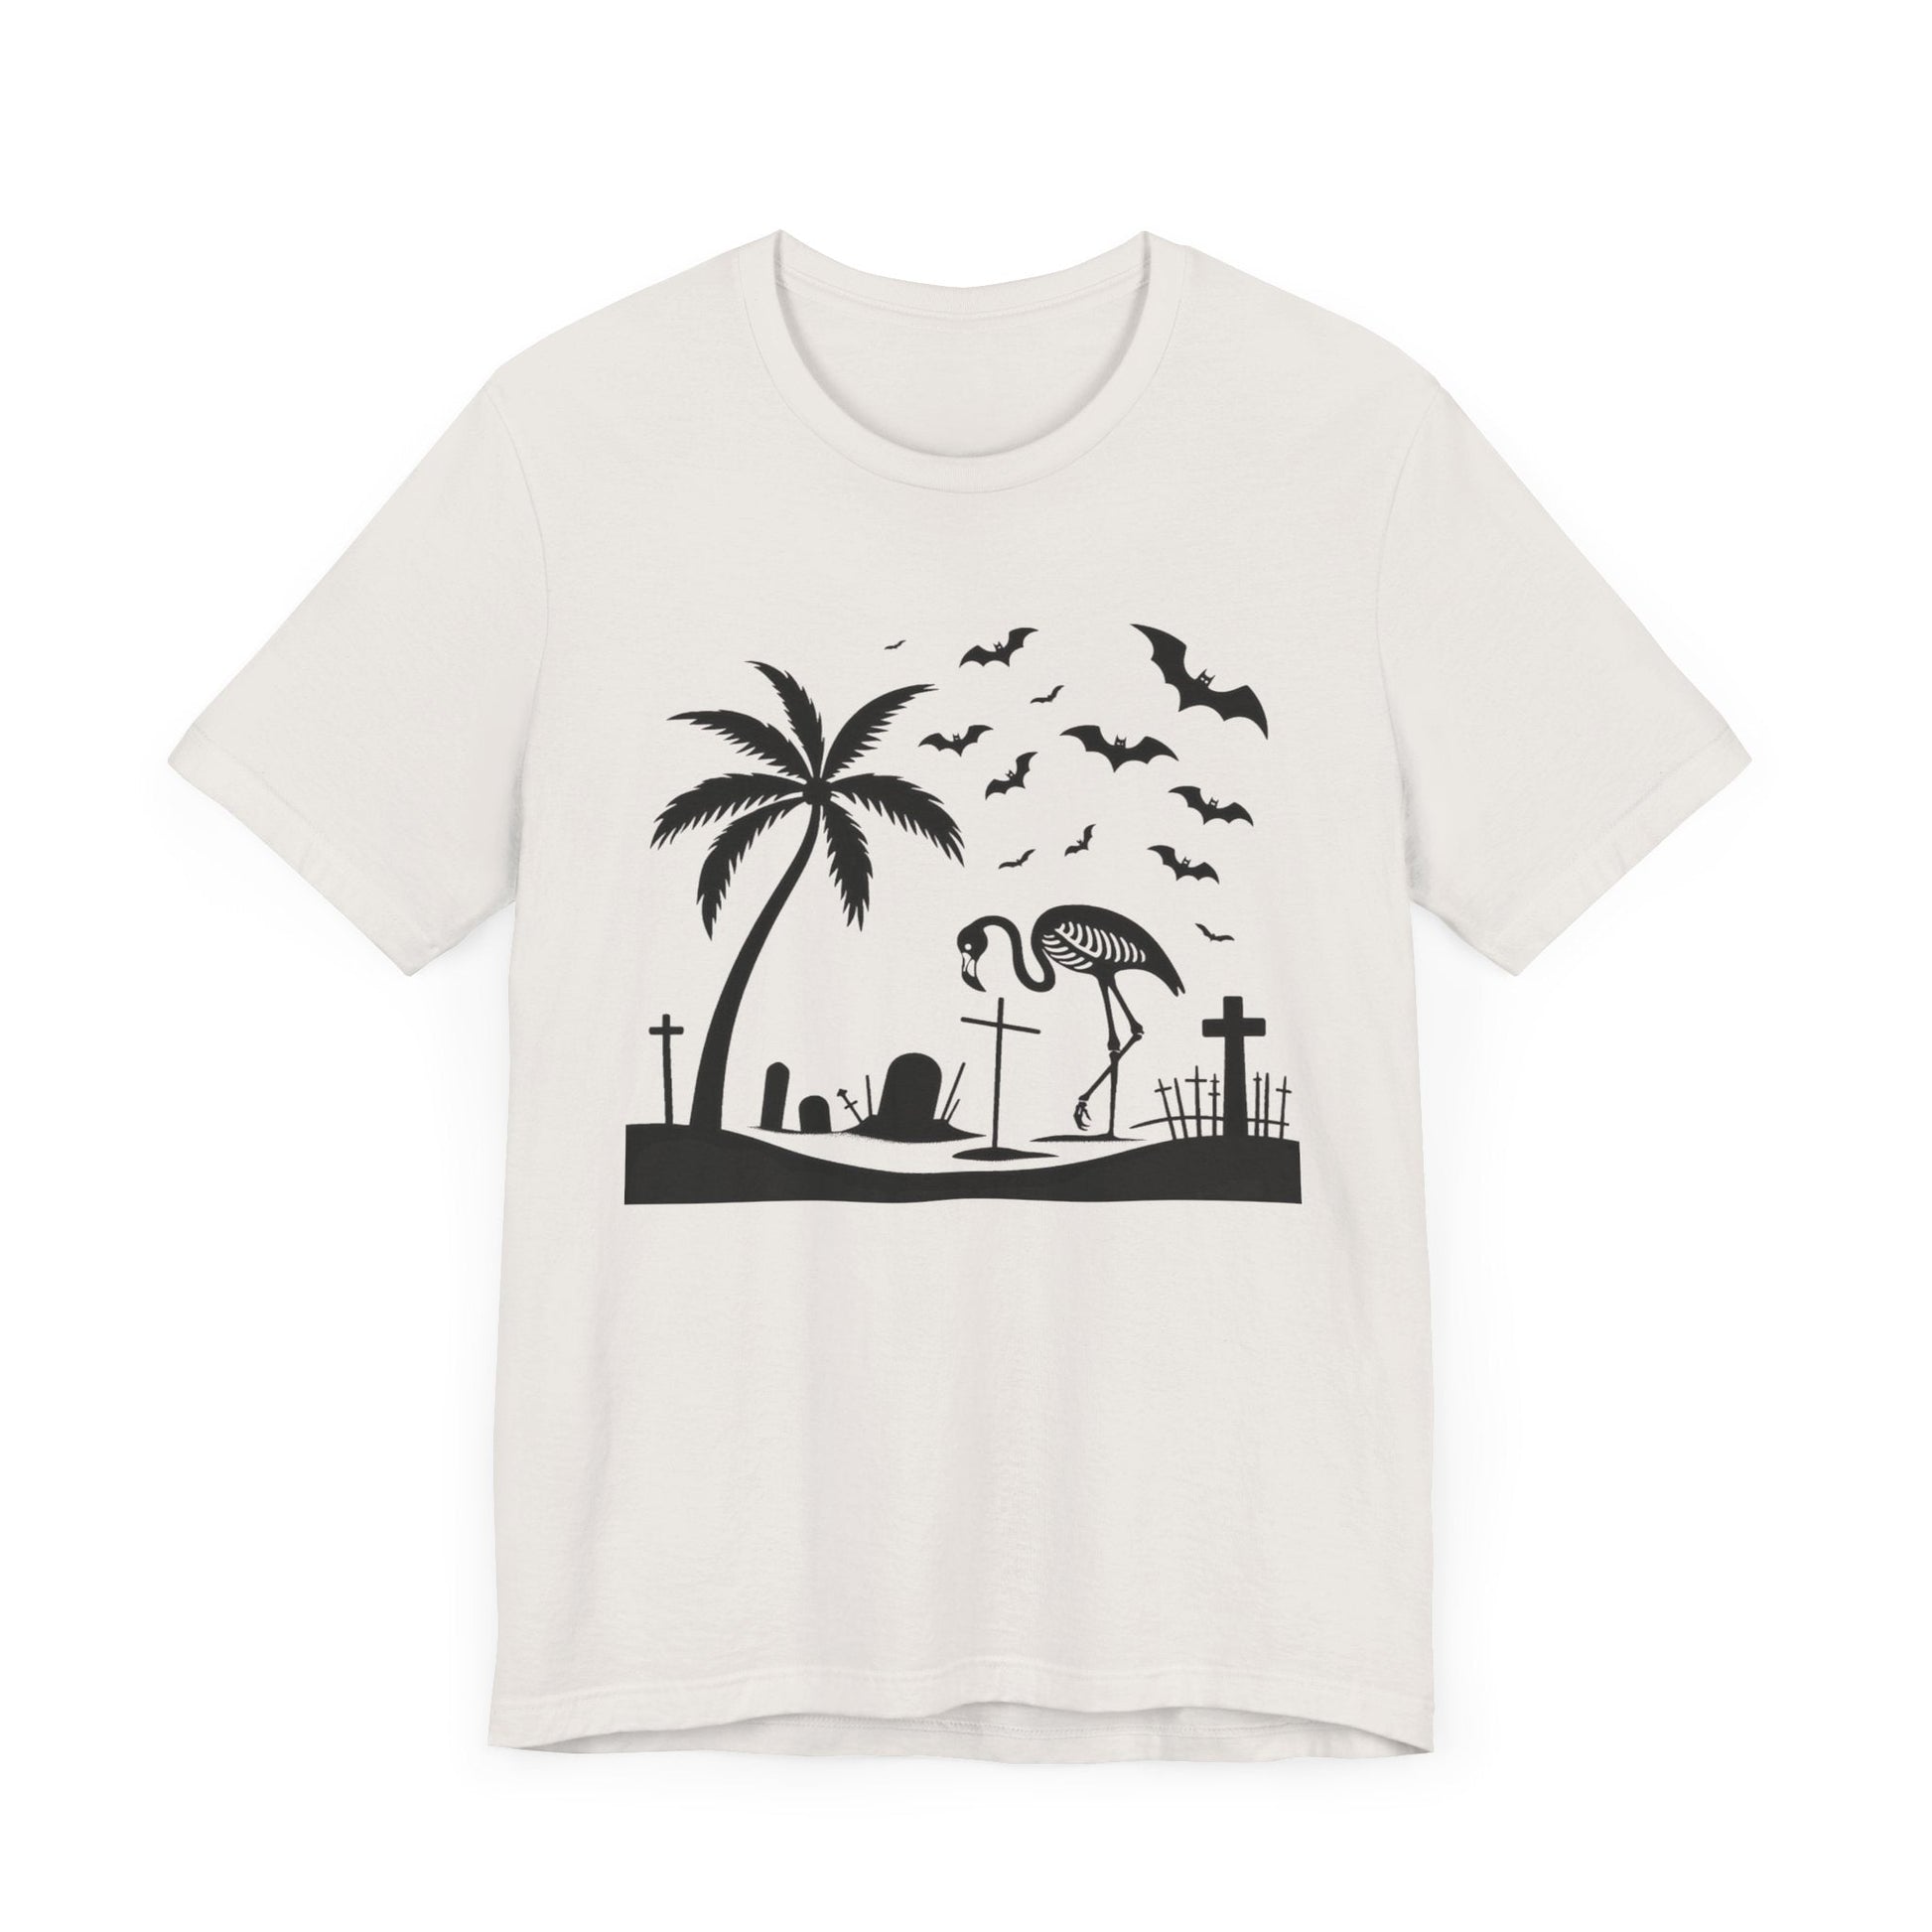 Flamingo Skeleton In Cemetery Short Sleeve Tee ShirtT - ShirtVTZdesignsVintage WhiteXSclothingCottonCrew neck